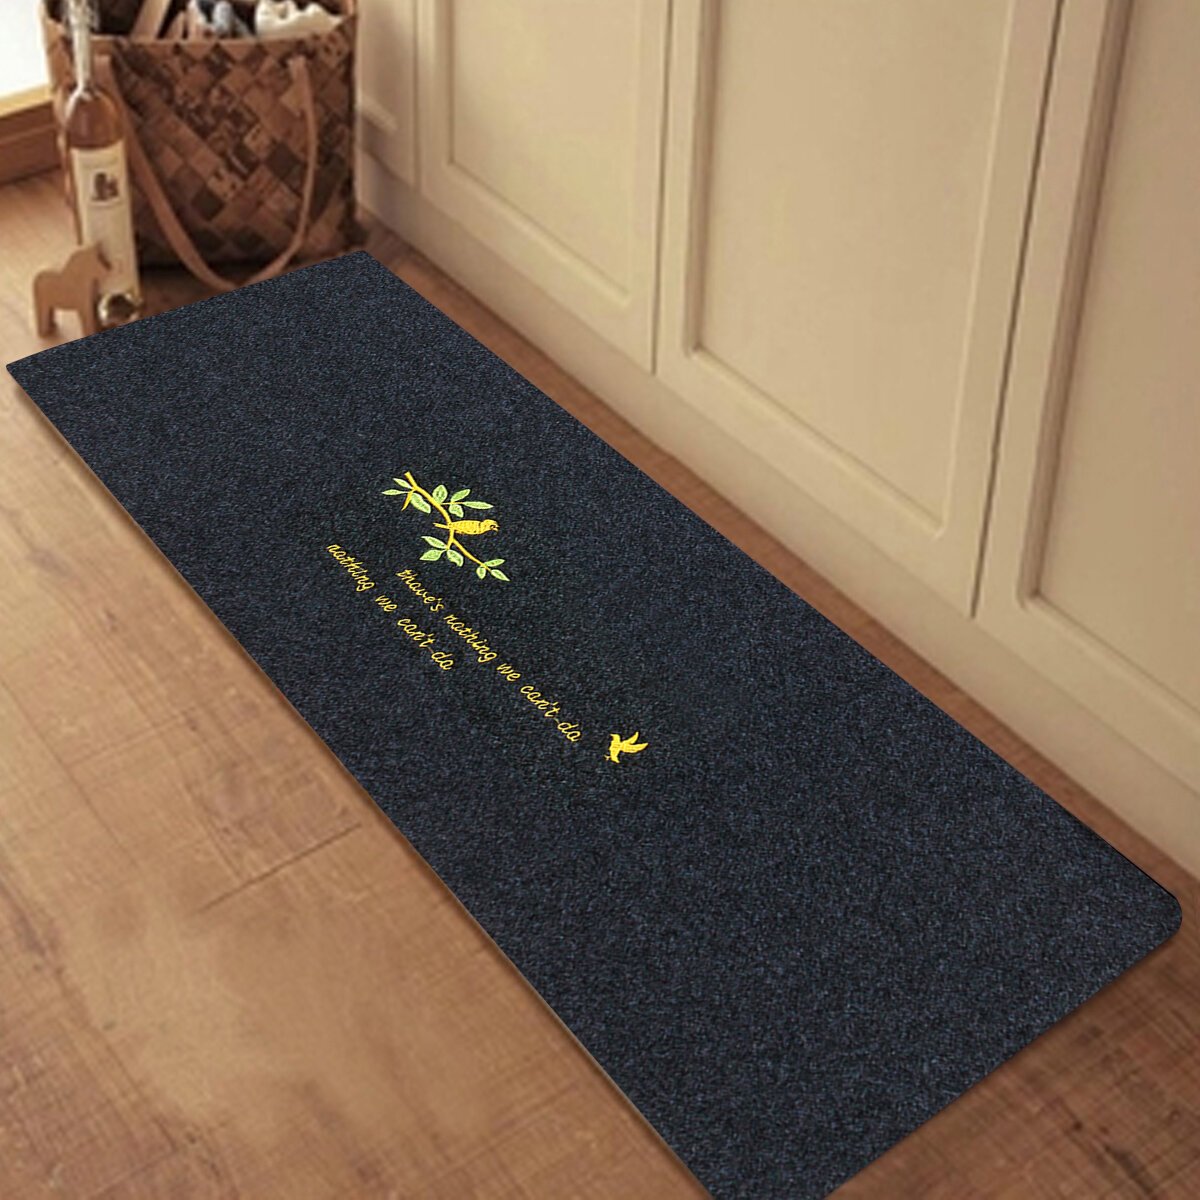 Indoor/Outdoor Non-Slip Kitchen Doormat Mat Floor Carpet Rug Entrance Outside Patio Inside Entry Way Bedroom Living Room Home Decor